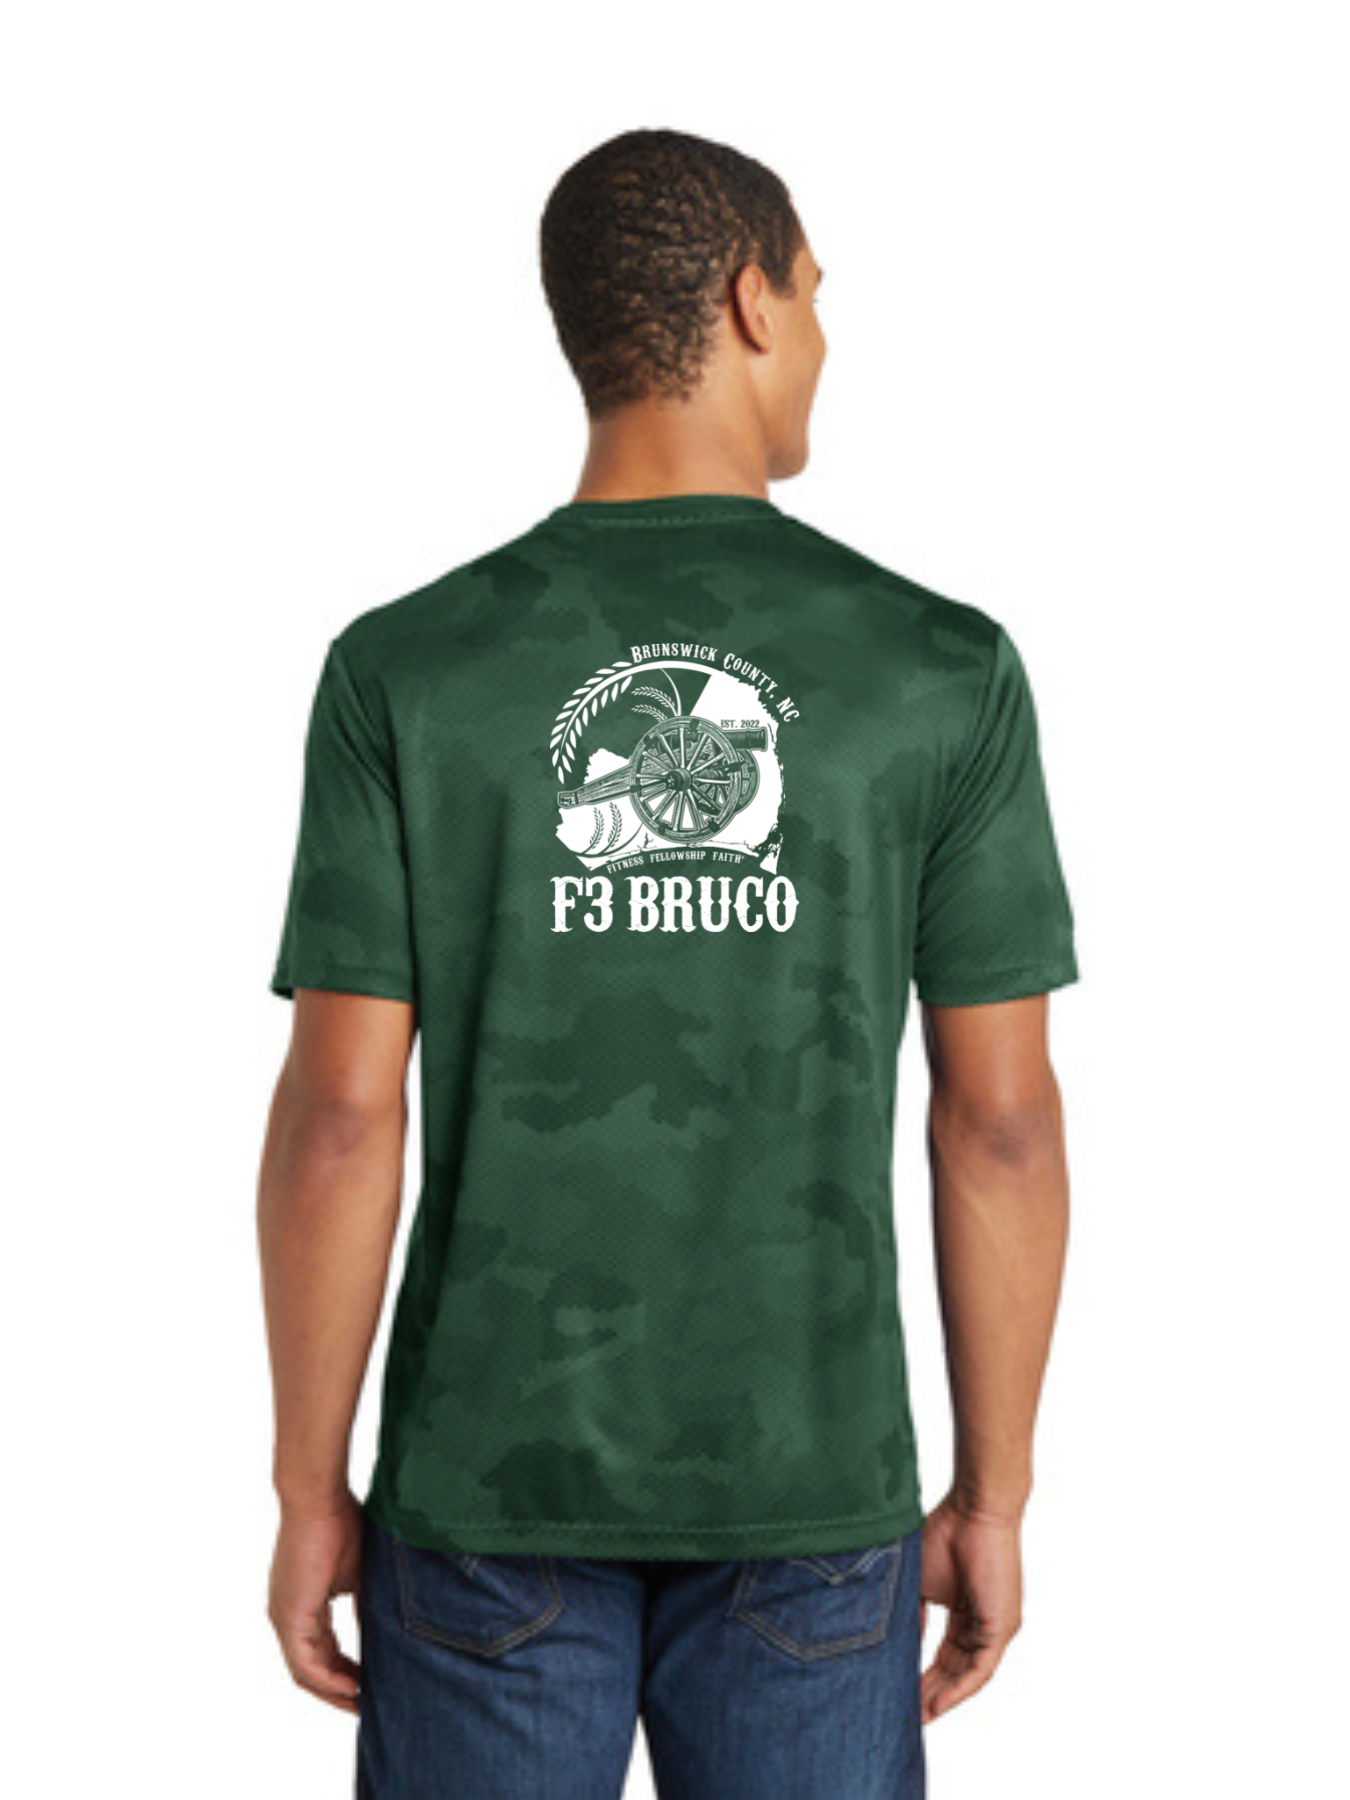 F3 Bruco Brunswick Pre-Order September 2022